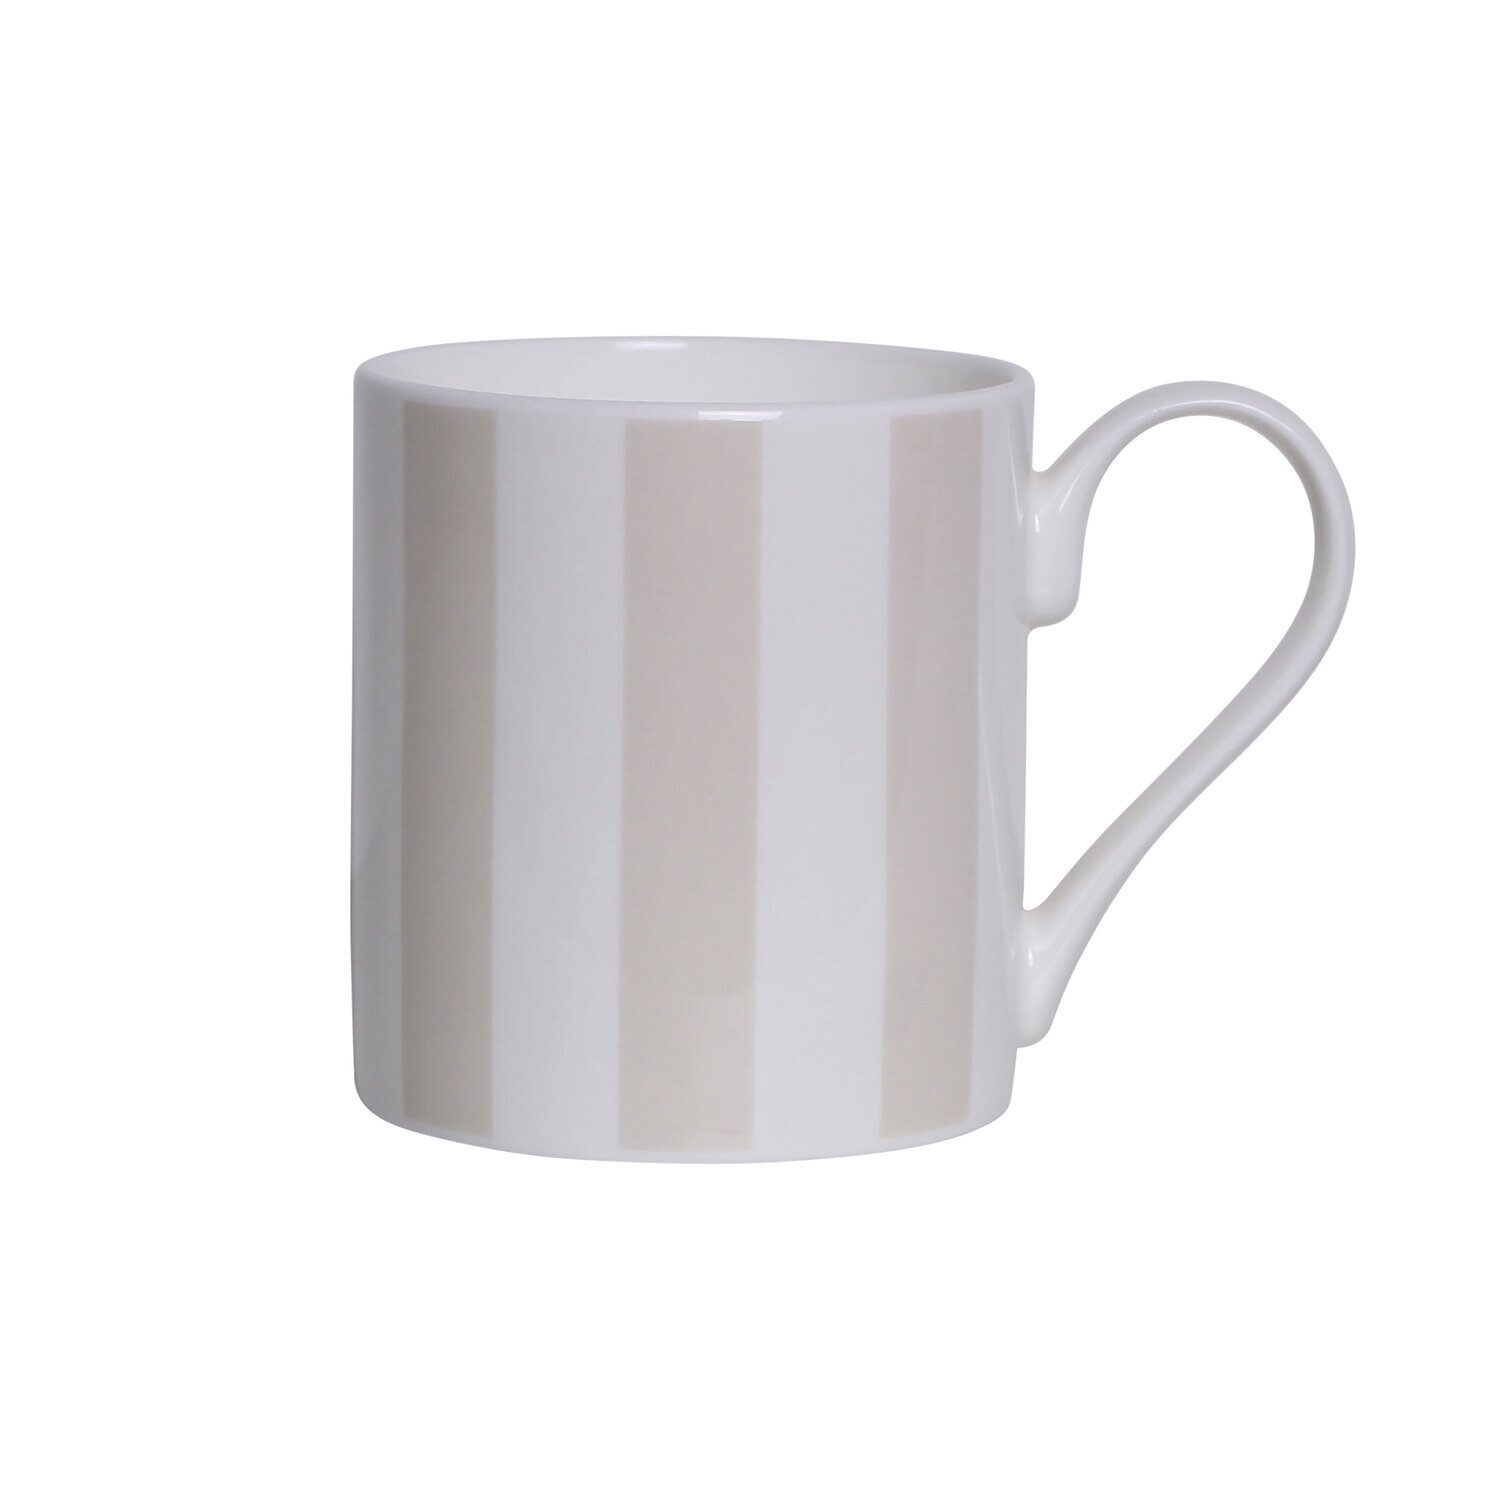 Addison Ross Cappuccino Stripe Fine China Mug 3 x 3.5 Inch Ceramic MUG010